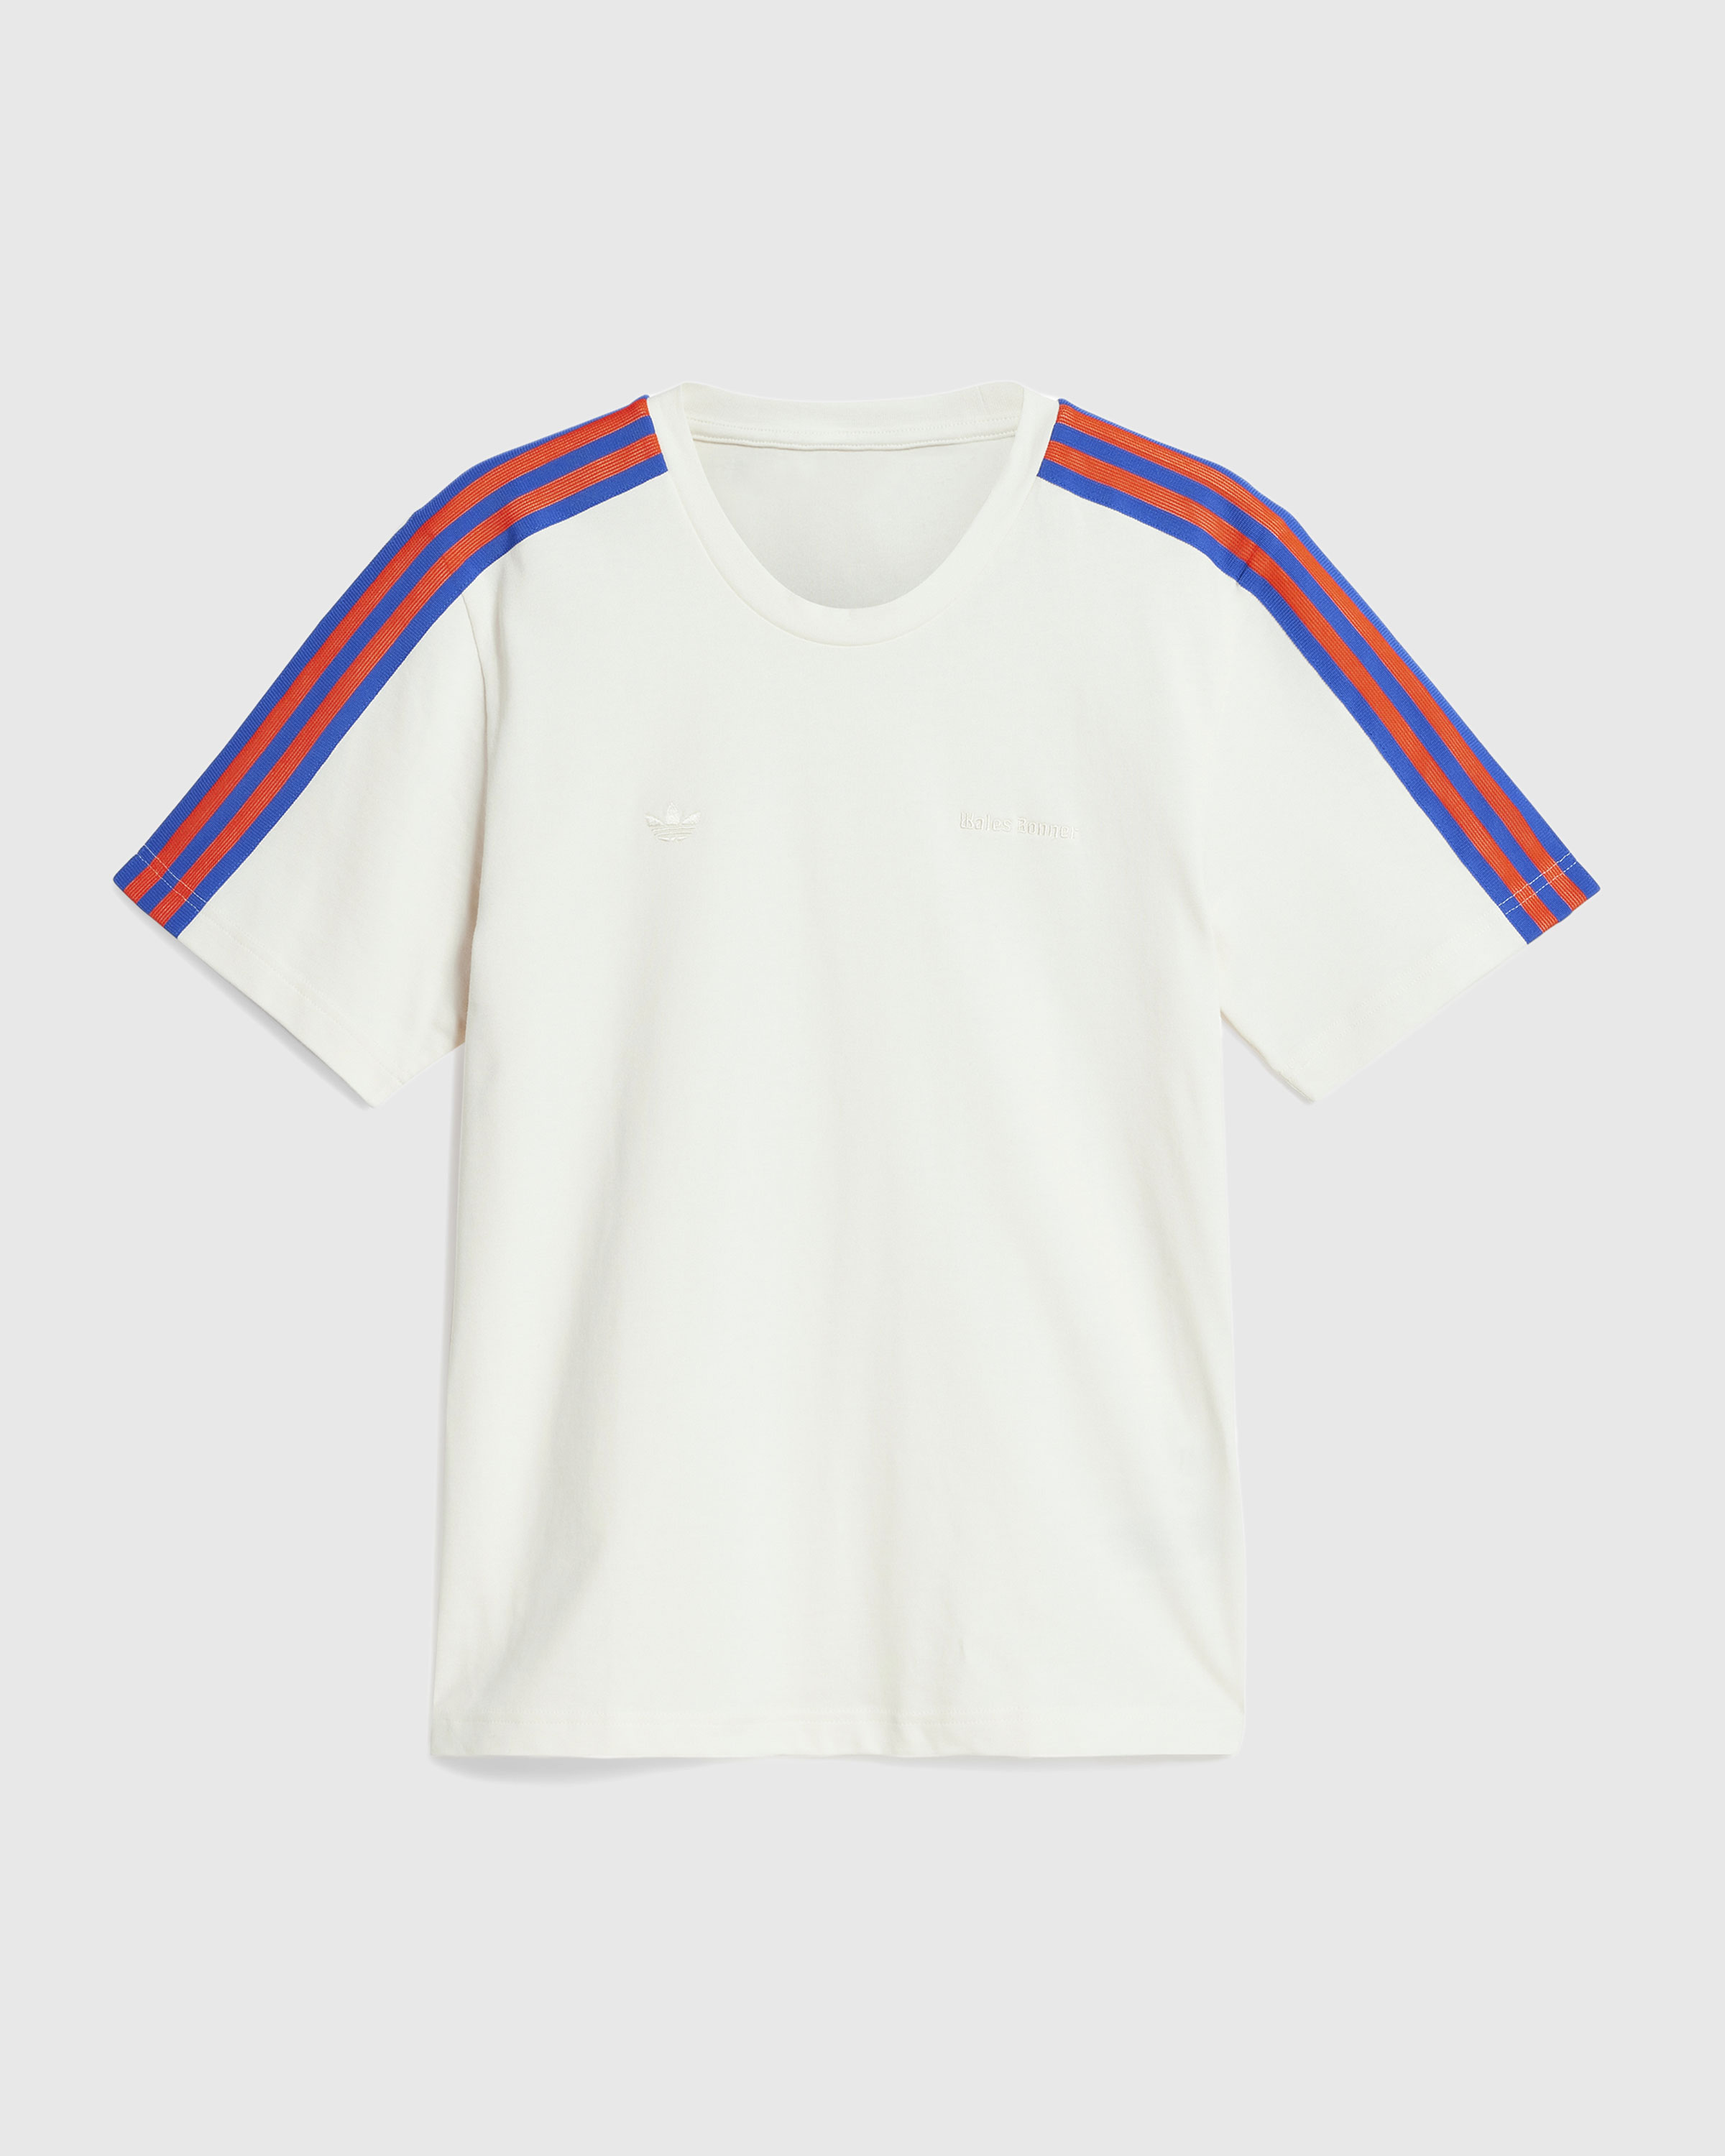 Adidas x Wales Bonner – Short-Sleeve Tee Chalk White - T-Shirts - White - Image 1